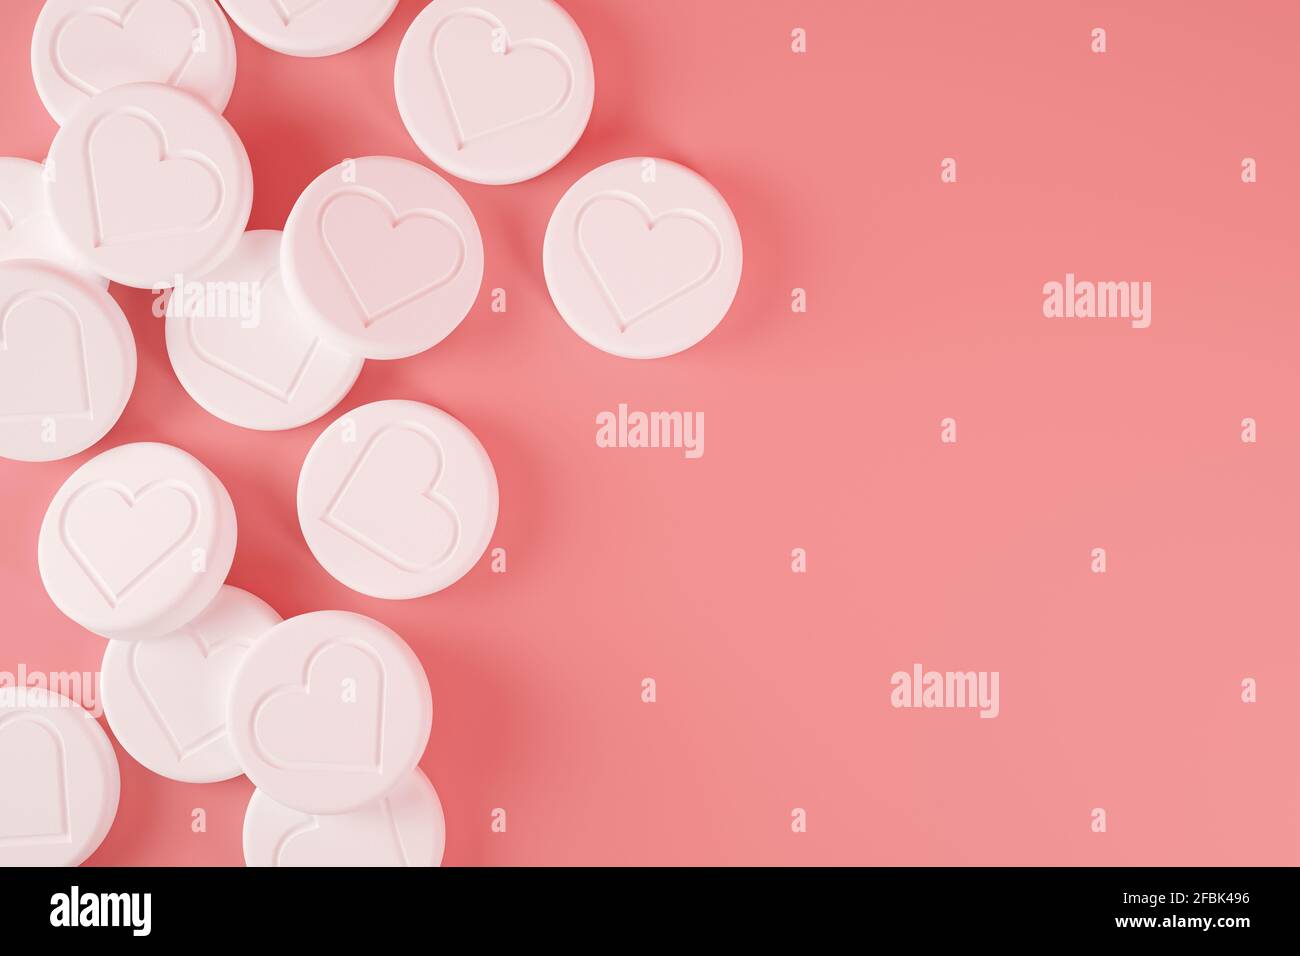 Pills with social media likes 3D illustration Stock Photo